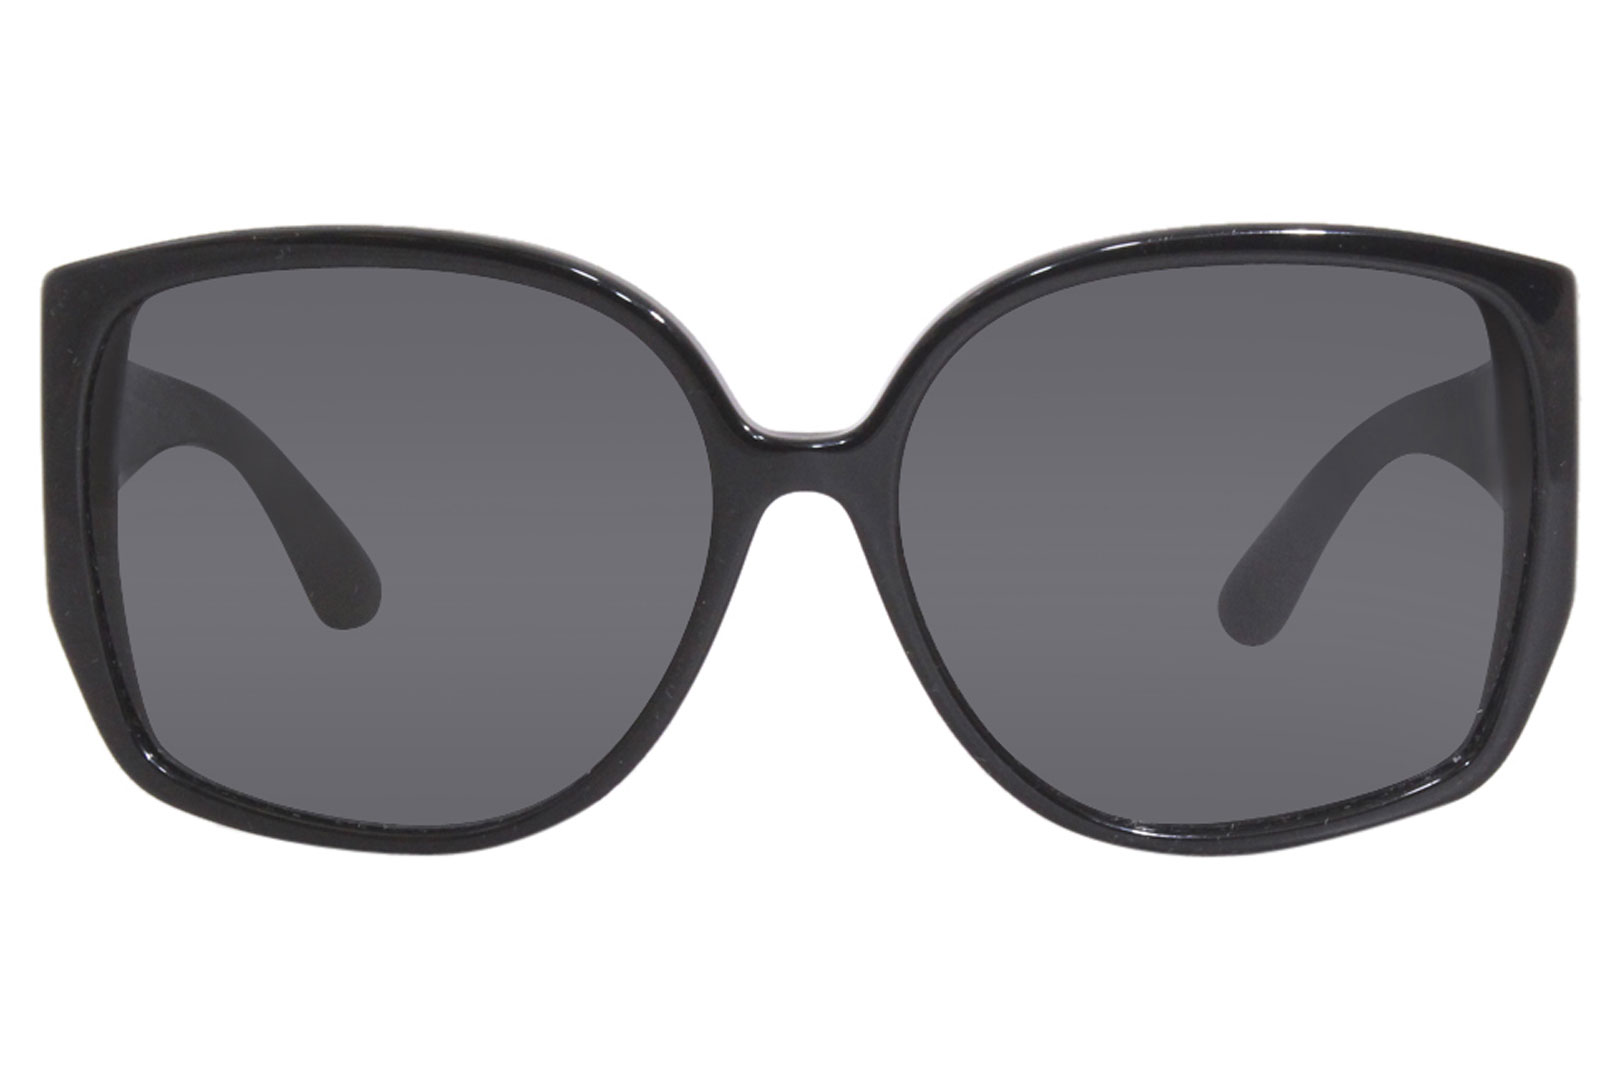 Burberry B-4290 Sunglasses Women's Fashion Square | EyeSpecs.com